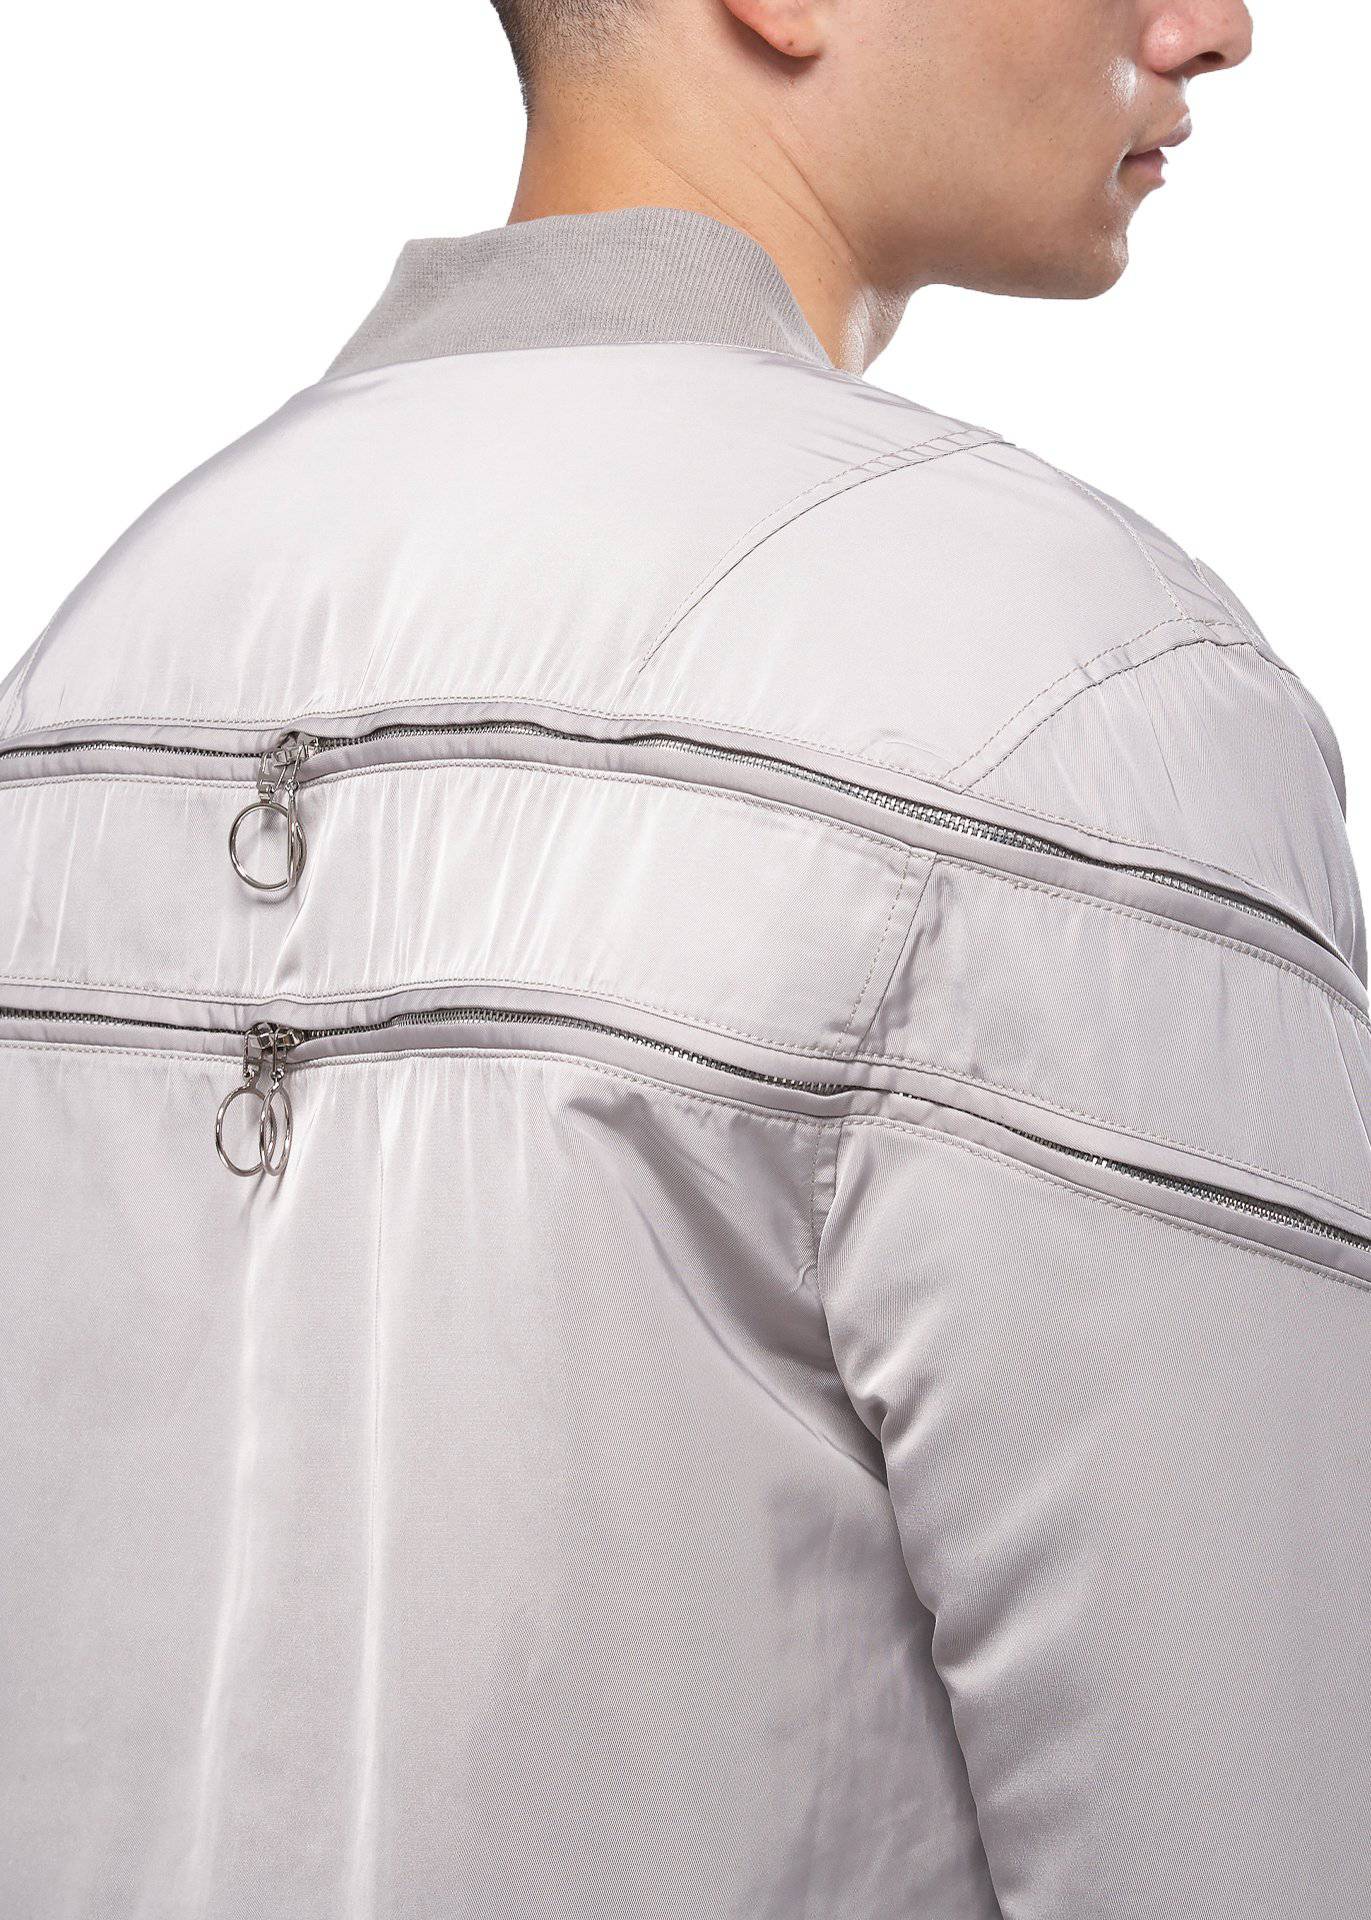 Konus Men's Bomber Jacket with Zipper Details in Grey by Shop at Konus